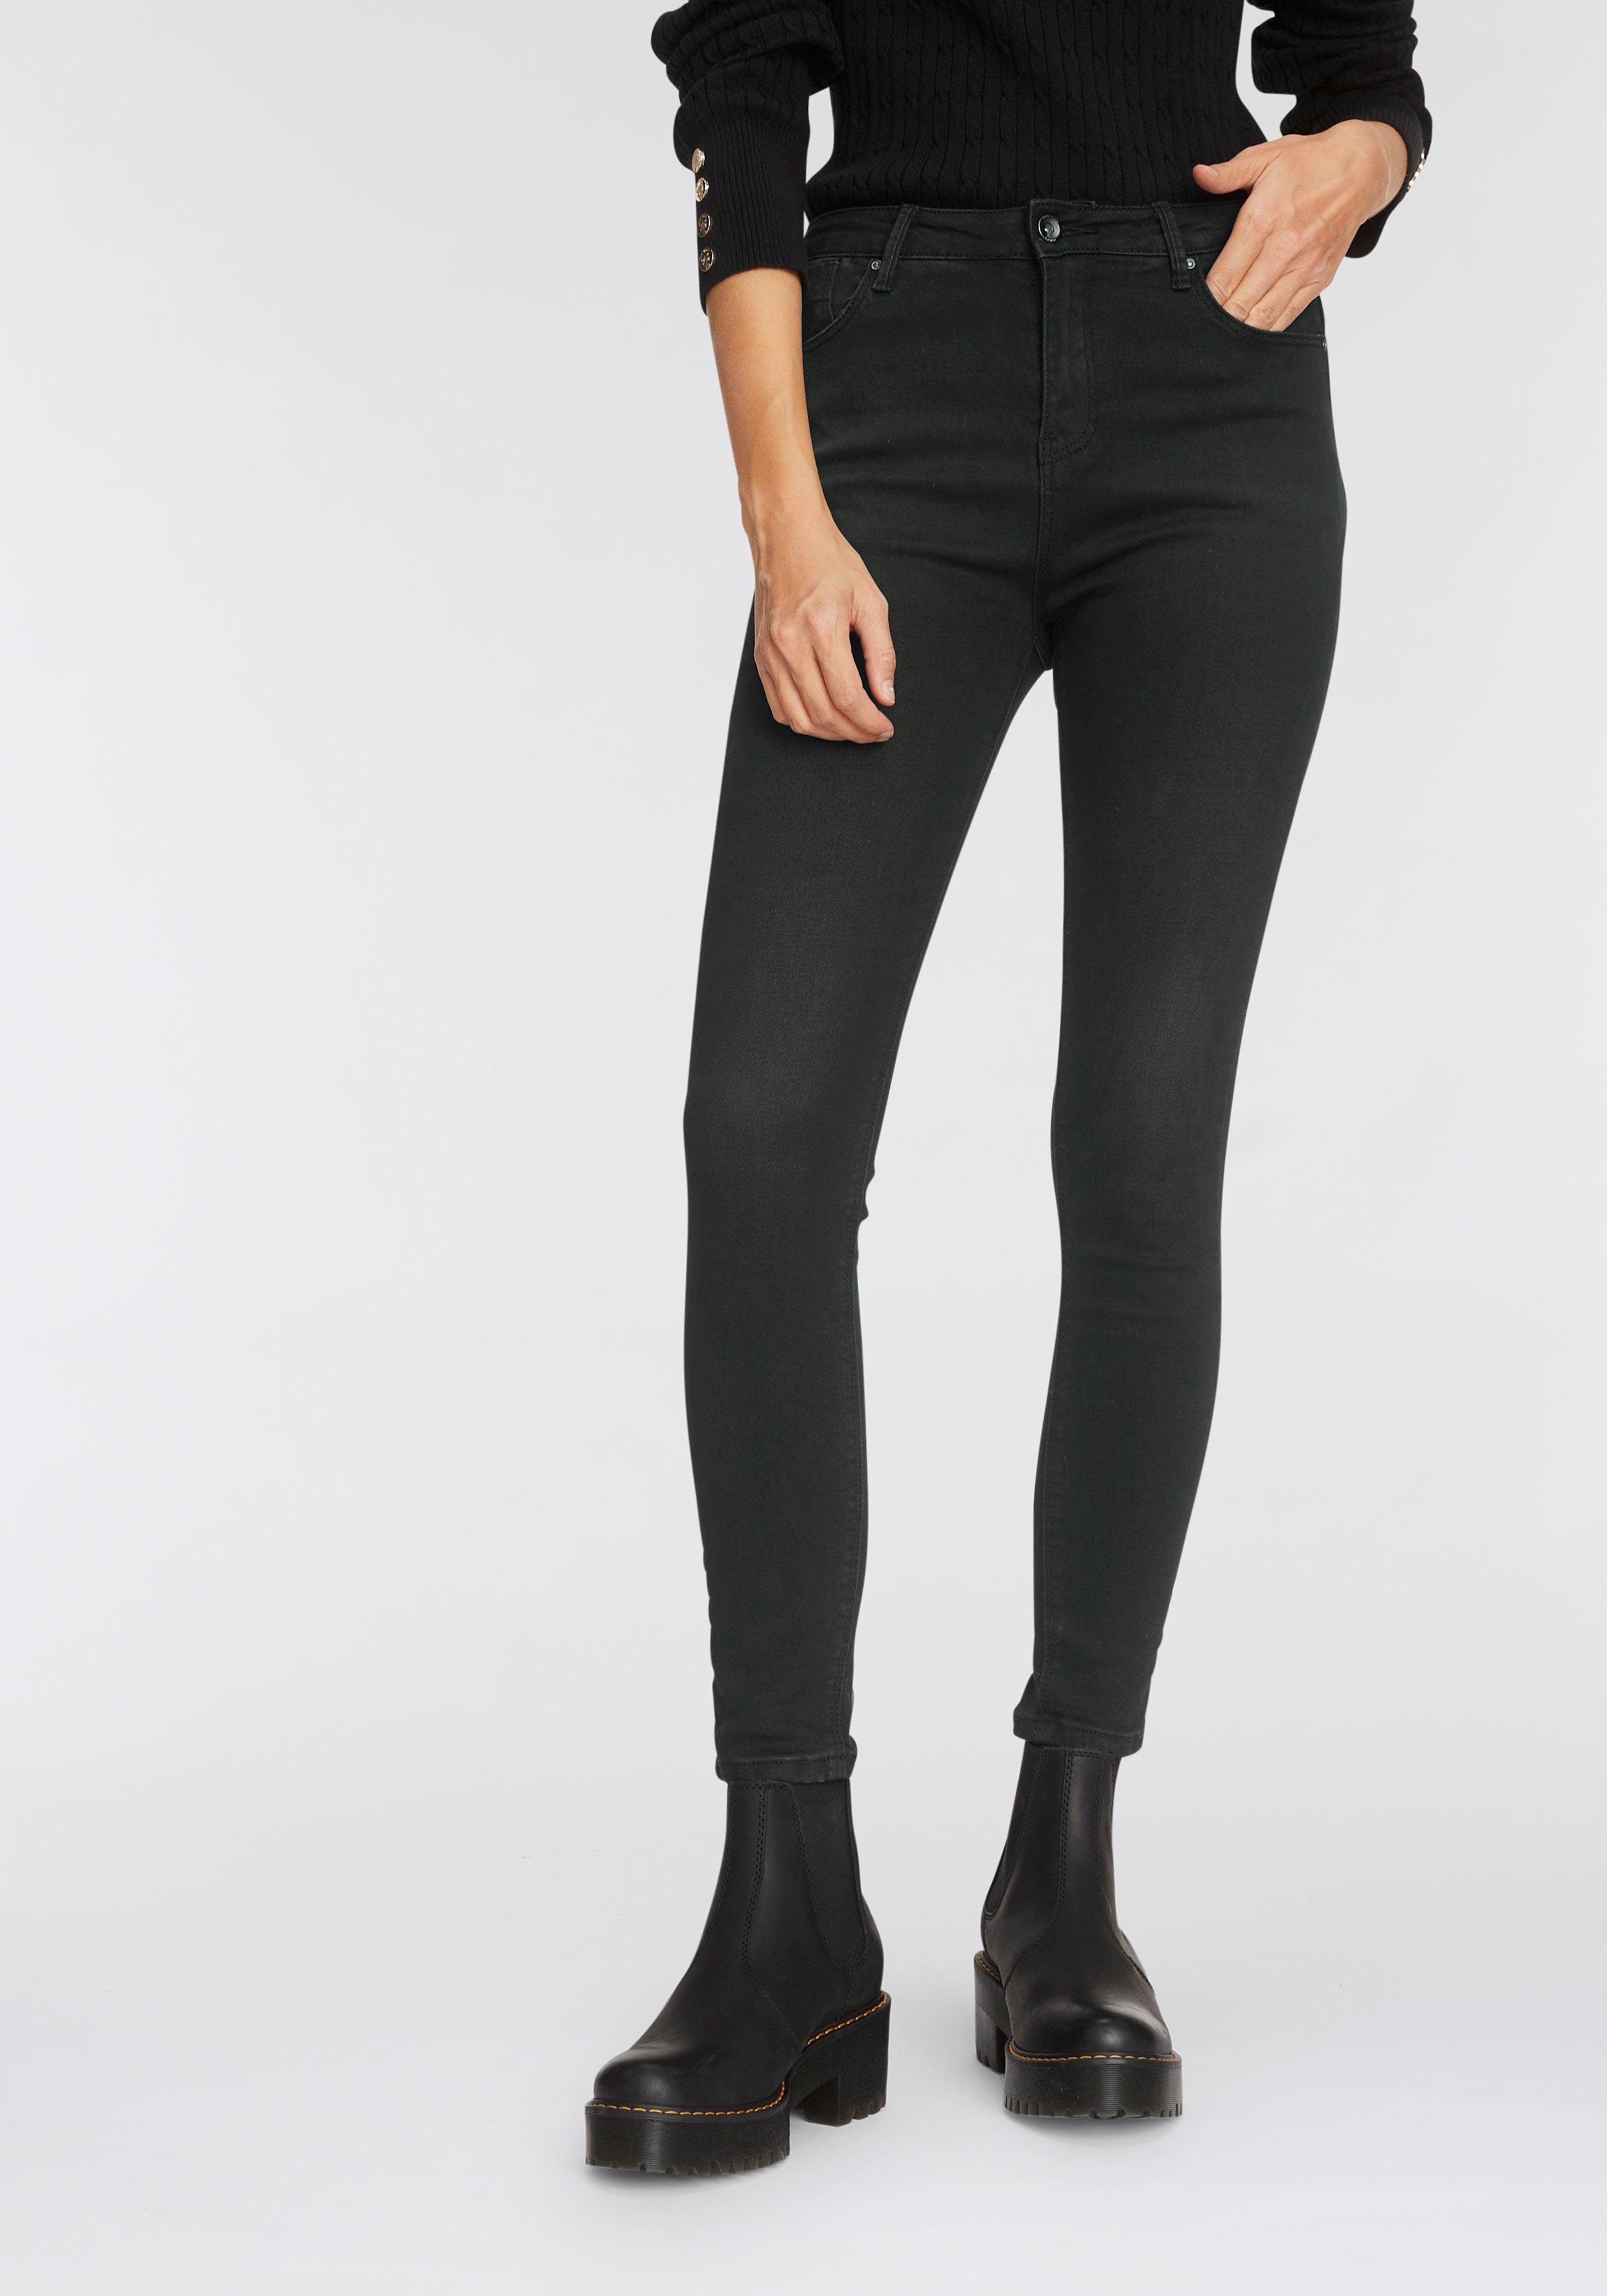 HaILY'S Skinny-fit-Jeans knöchelfrei online kaufen | OTTO